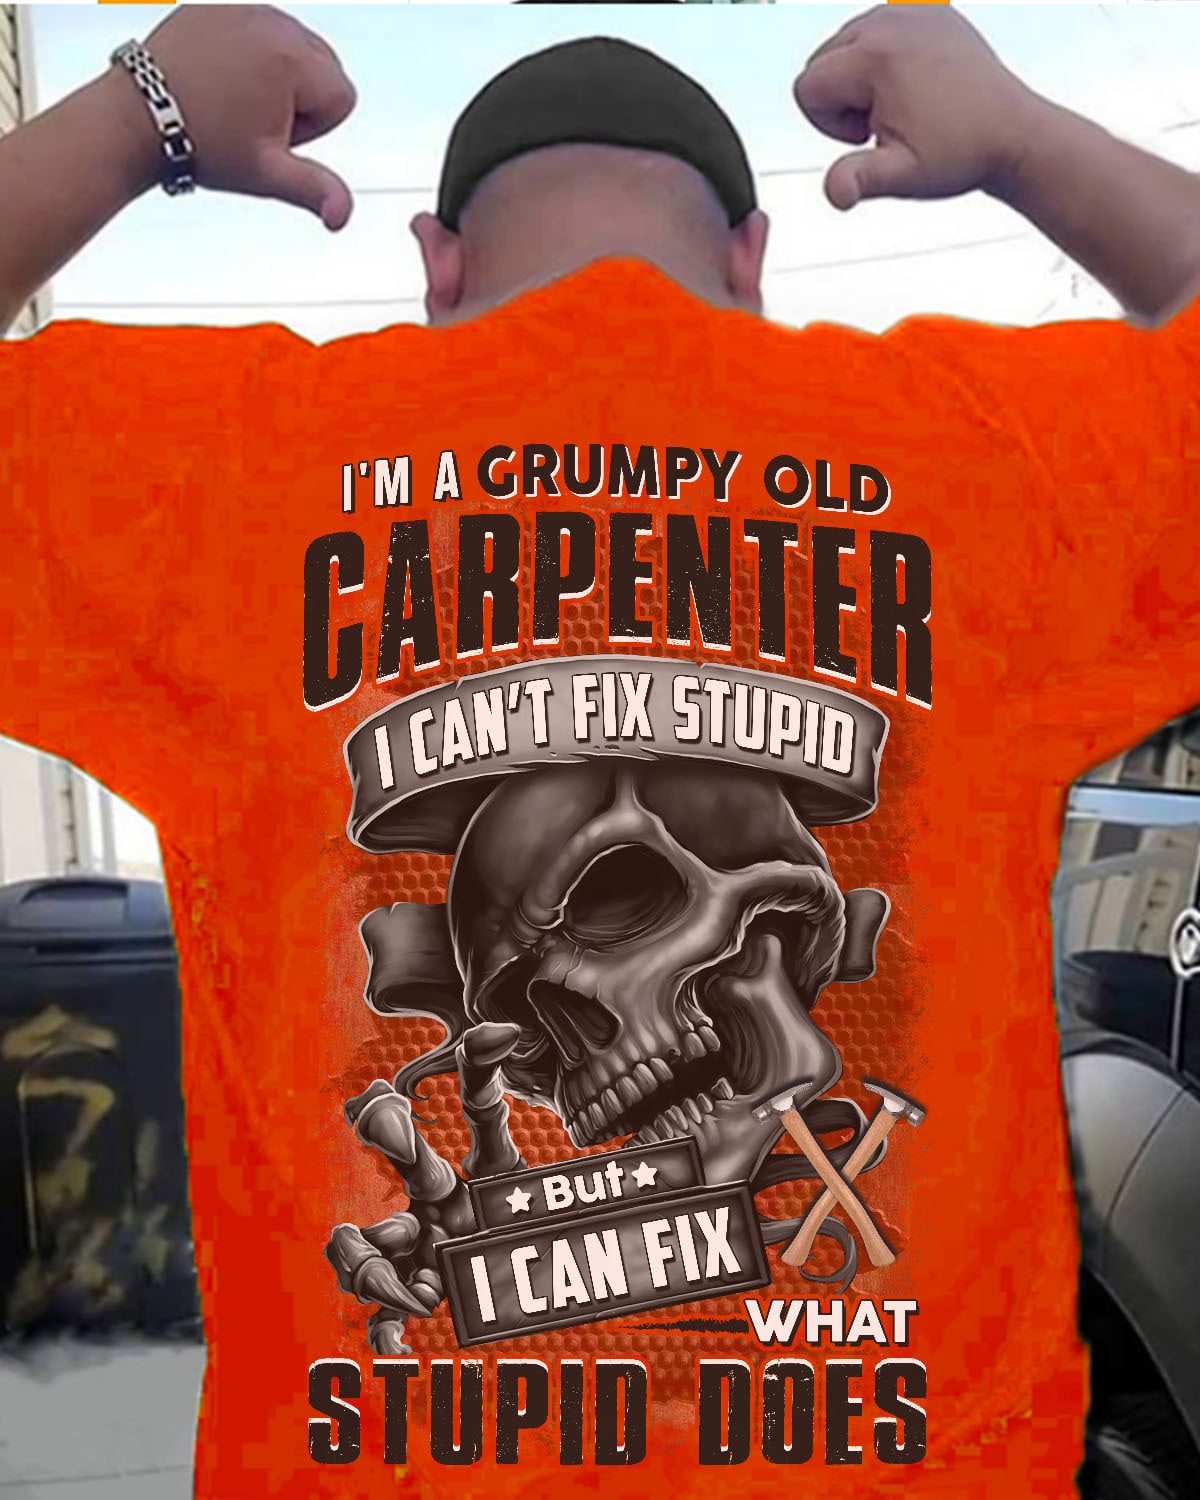 I'm a grumpy old carpenter I can't fix stupid but I can fix what stupid does - Evil carpenter